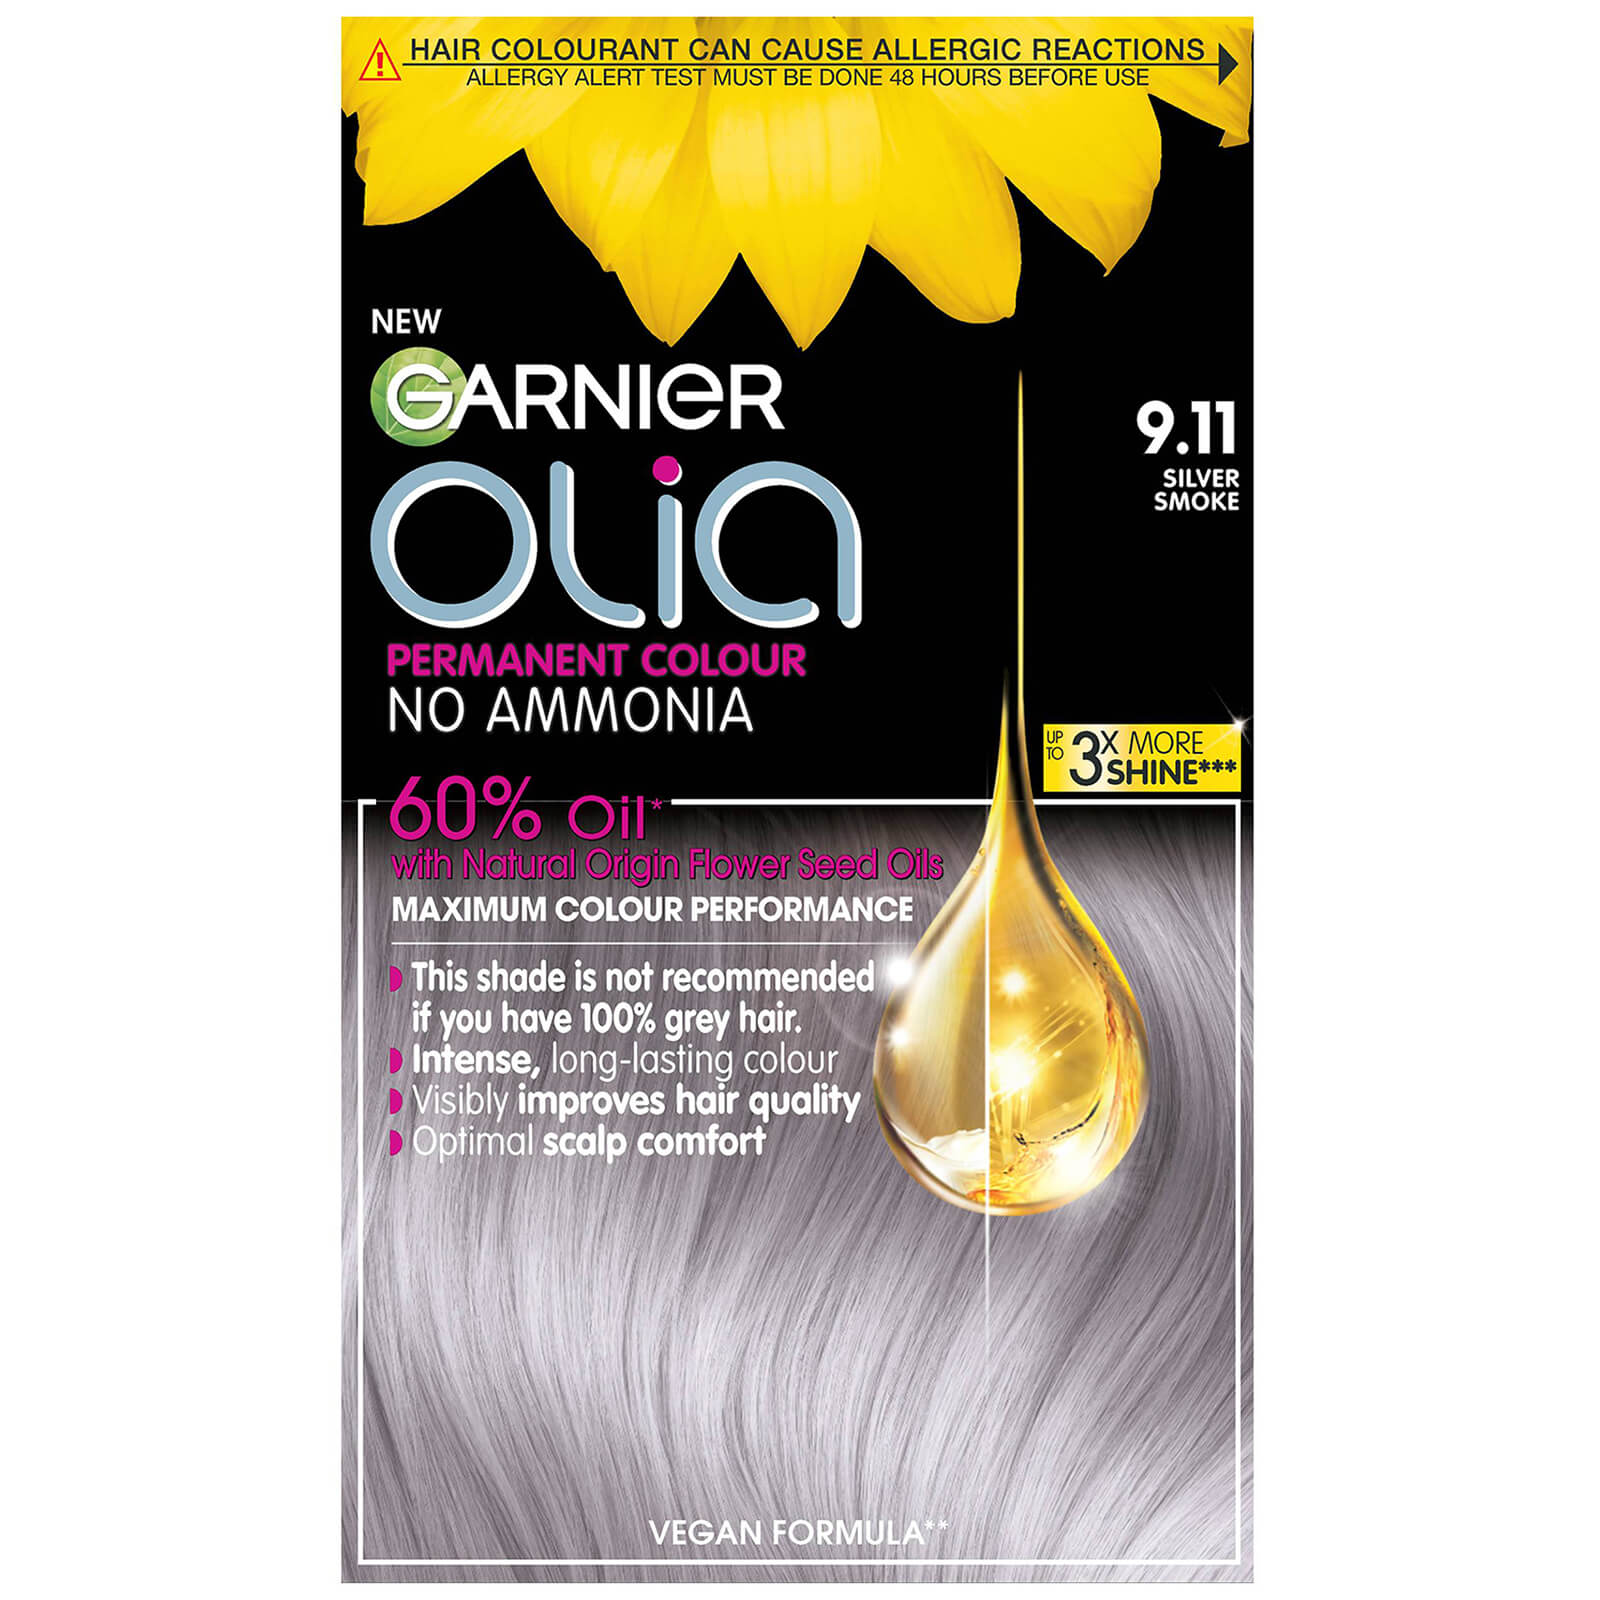 Garnier Olia Permanent Hair Dye (Various Shades) - 9.11 Metallic Silver